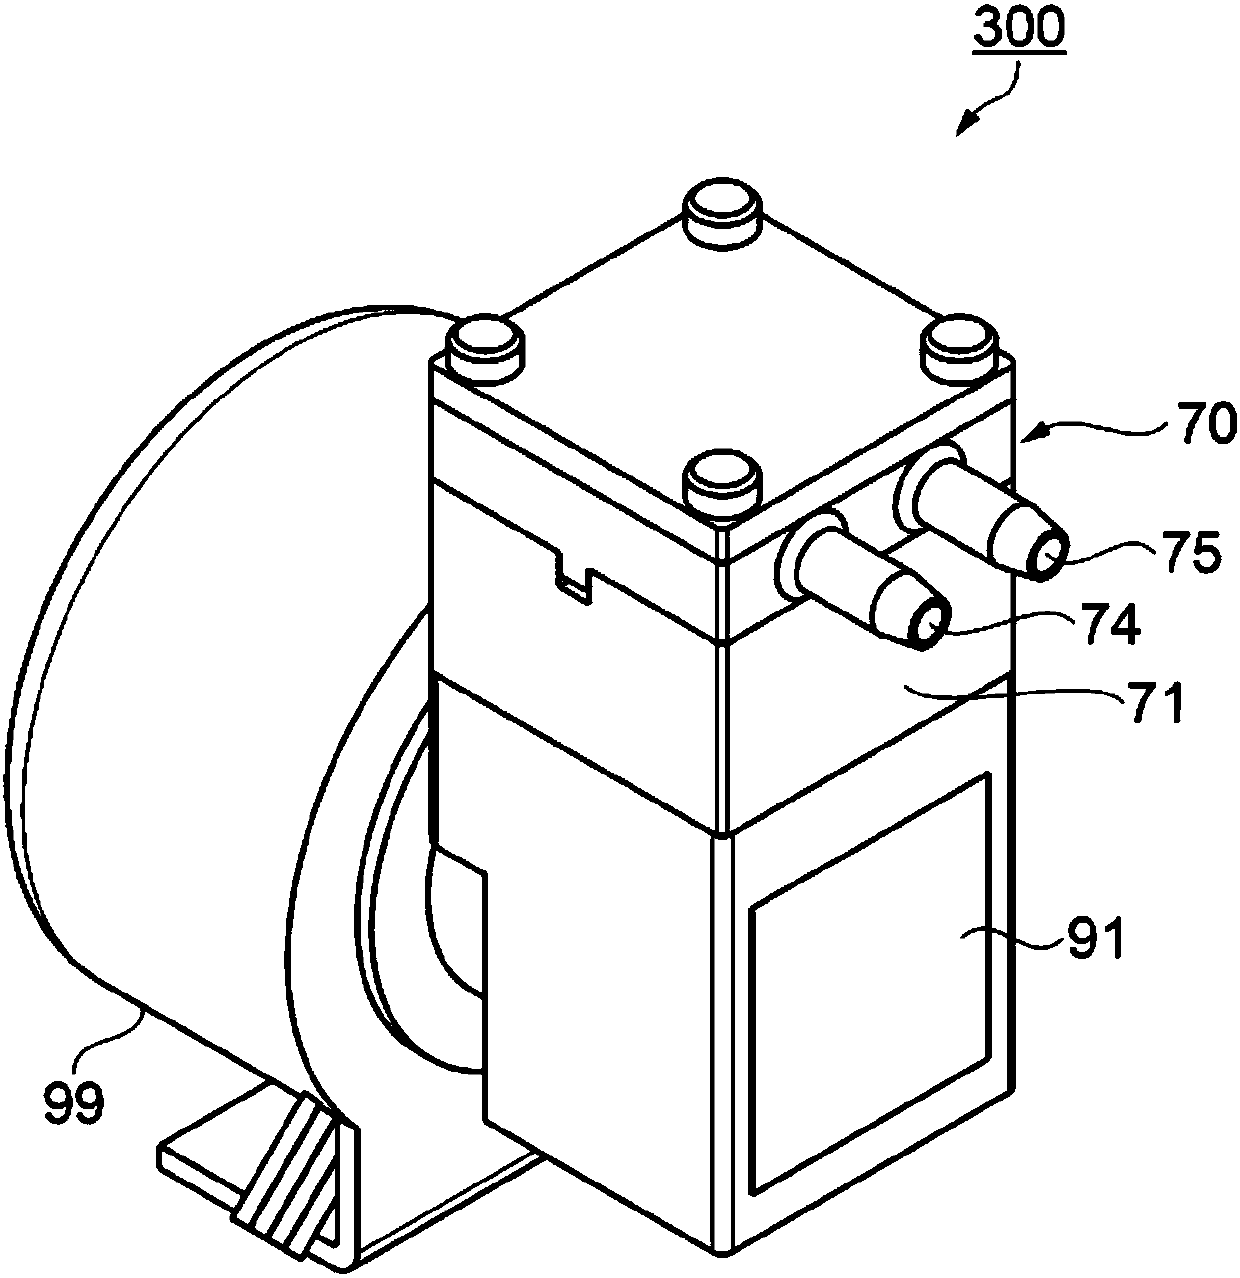 Check valve, diaphragm pump, and printing apparatus